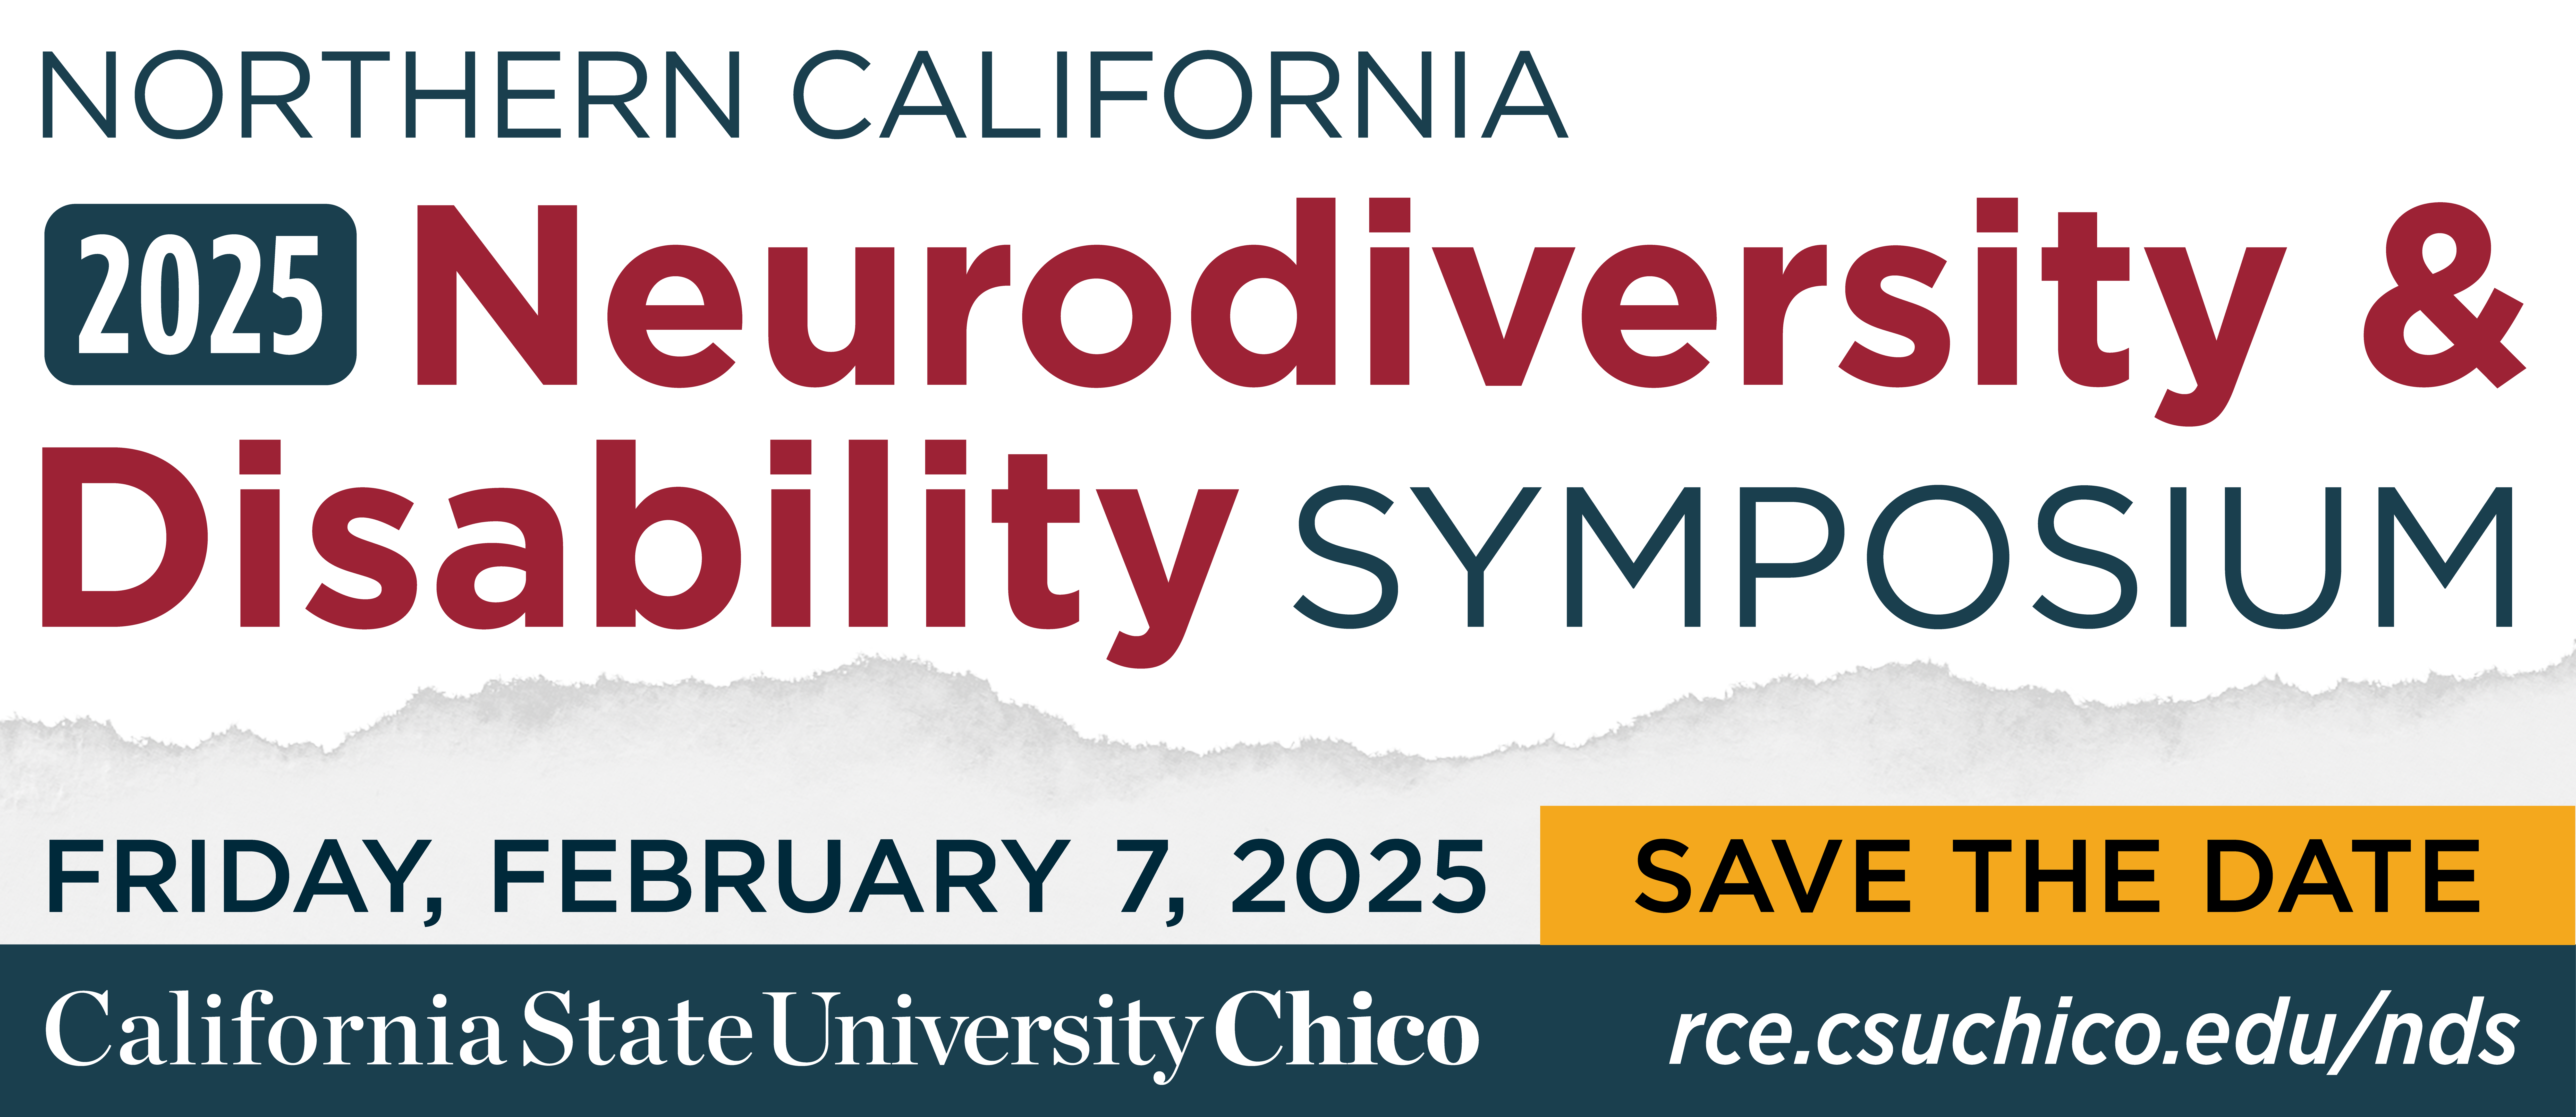 Northern California Neurodiversity & Disability Symposium 2025. February 7, California State University, Chico